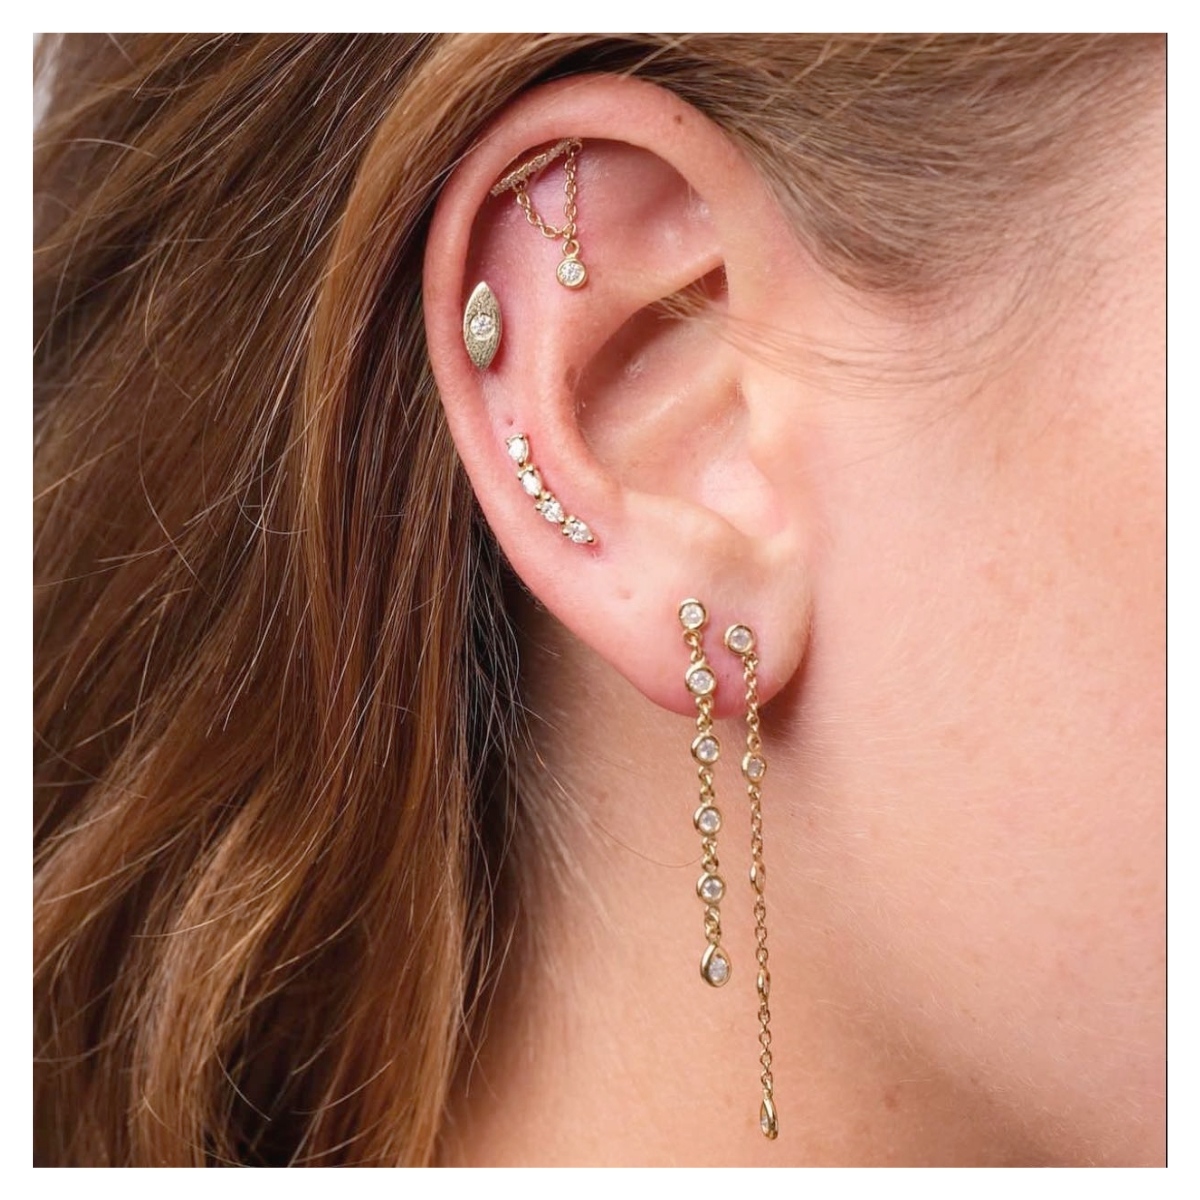 ✨
.
.
.
.
#boomandmellow #karolynbrown #piercings #piercing #earrings #earringstack #eargame #earstack #goldjewelry #gold #diamond #goldearrings #goldpiercings #fyp #fypage #foryou #foryoupage #foryourpage #dubai #dxb #dubaigifts #gifts #giftshop